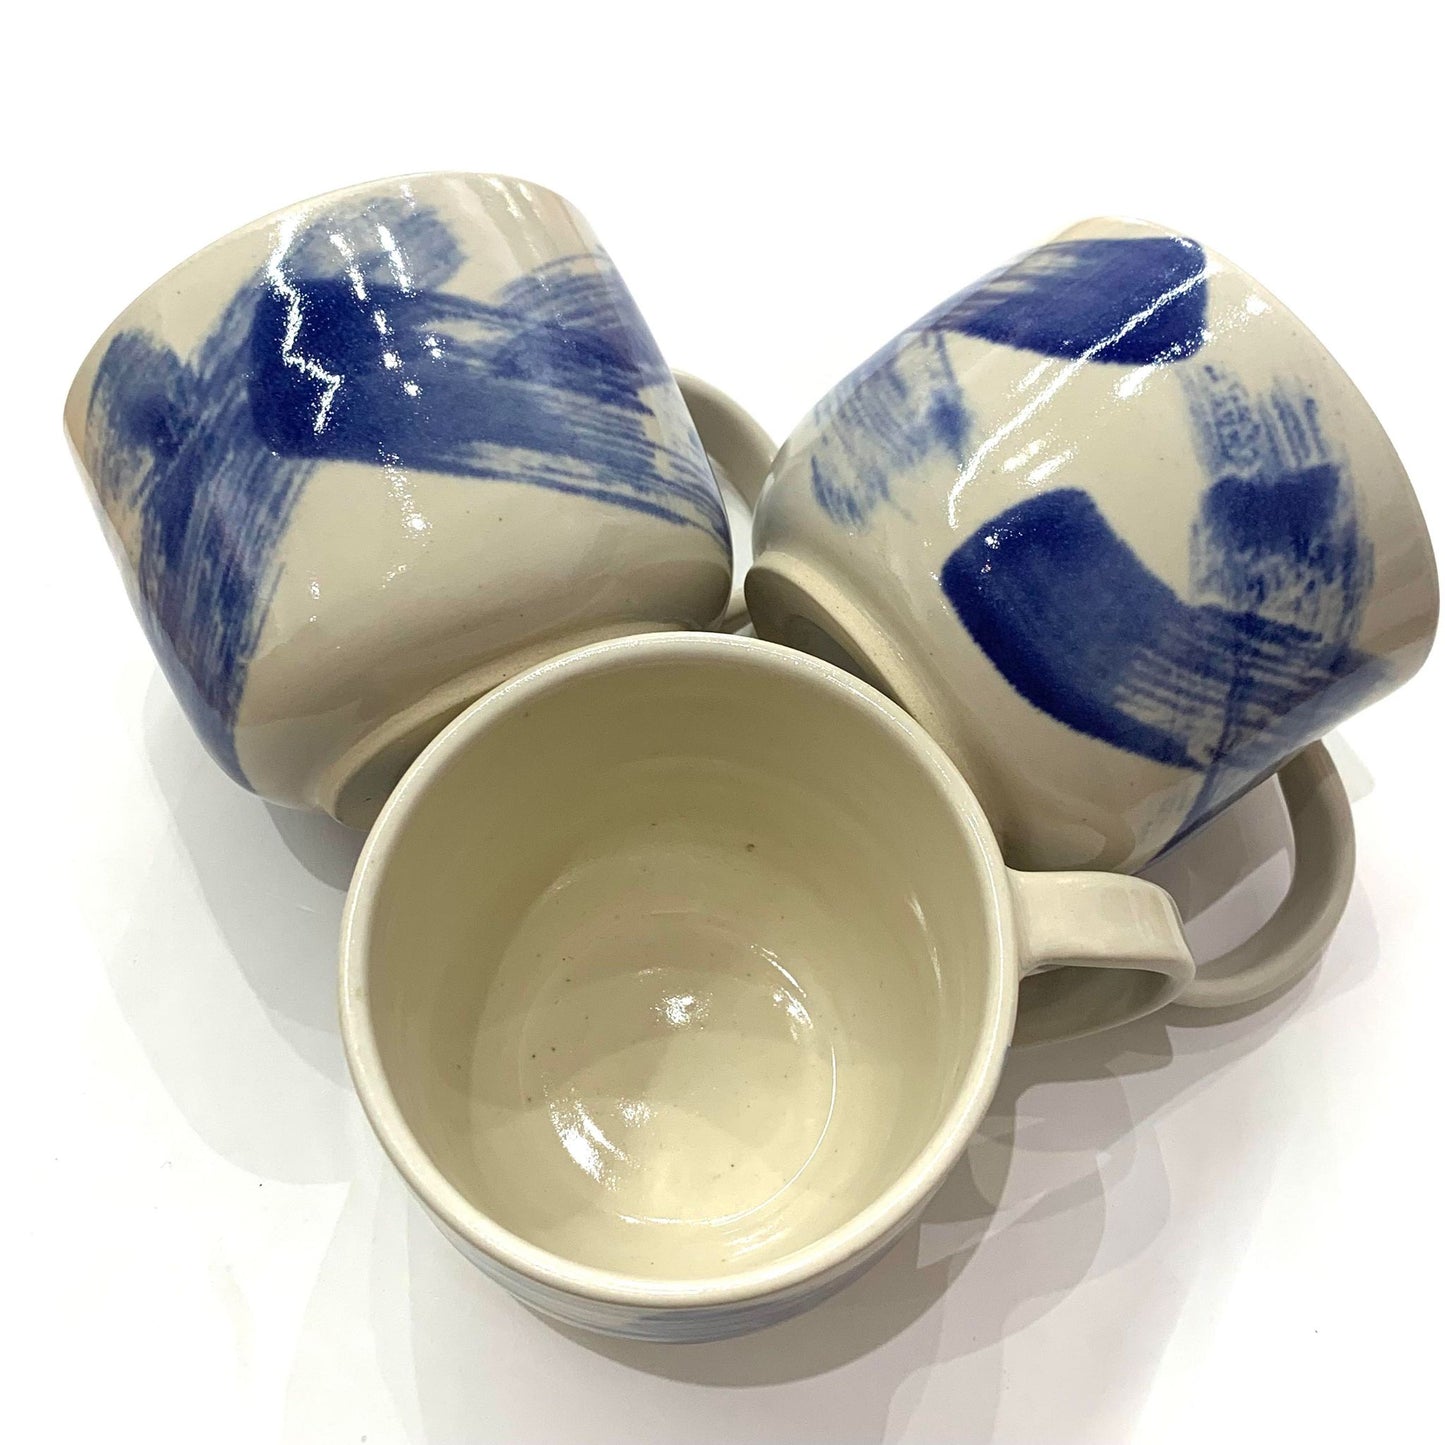 ELI C STUDIO- Ocean Breeze Handmade Ceramic Mug